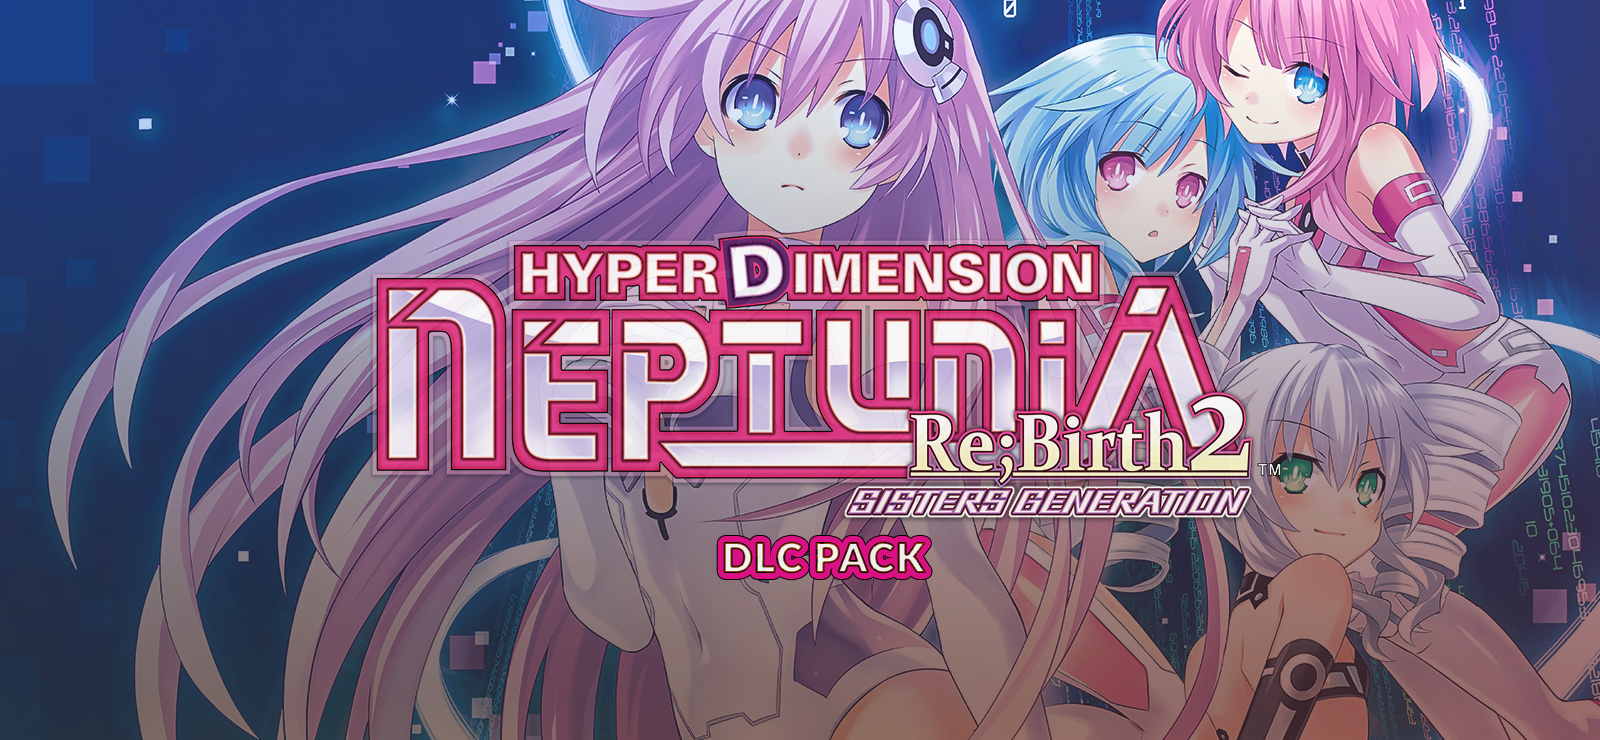 Hyperdimension Neptunia Re;Birth2: Sisters Generation - DLC Pack